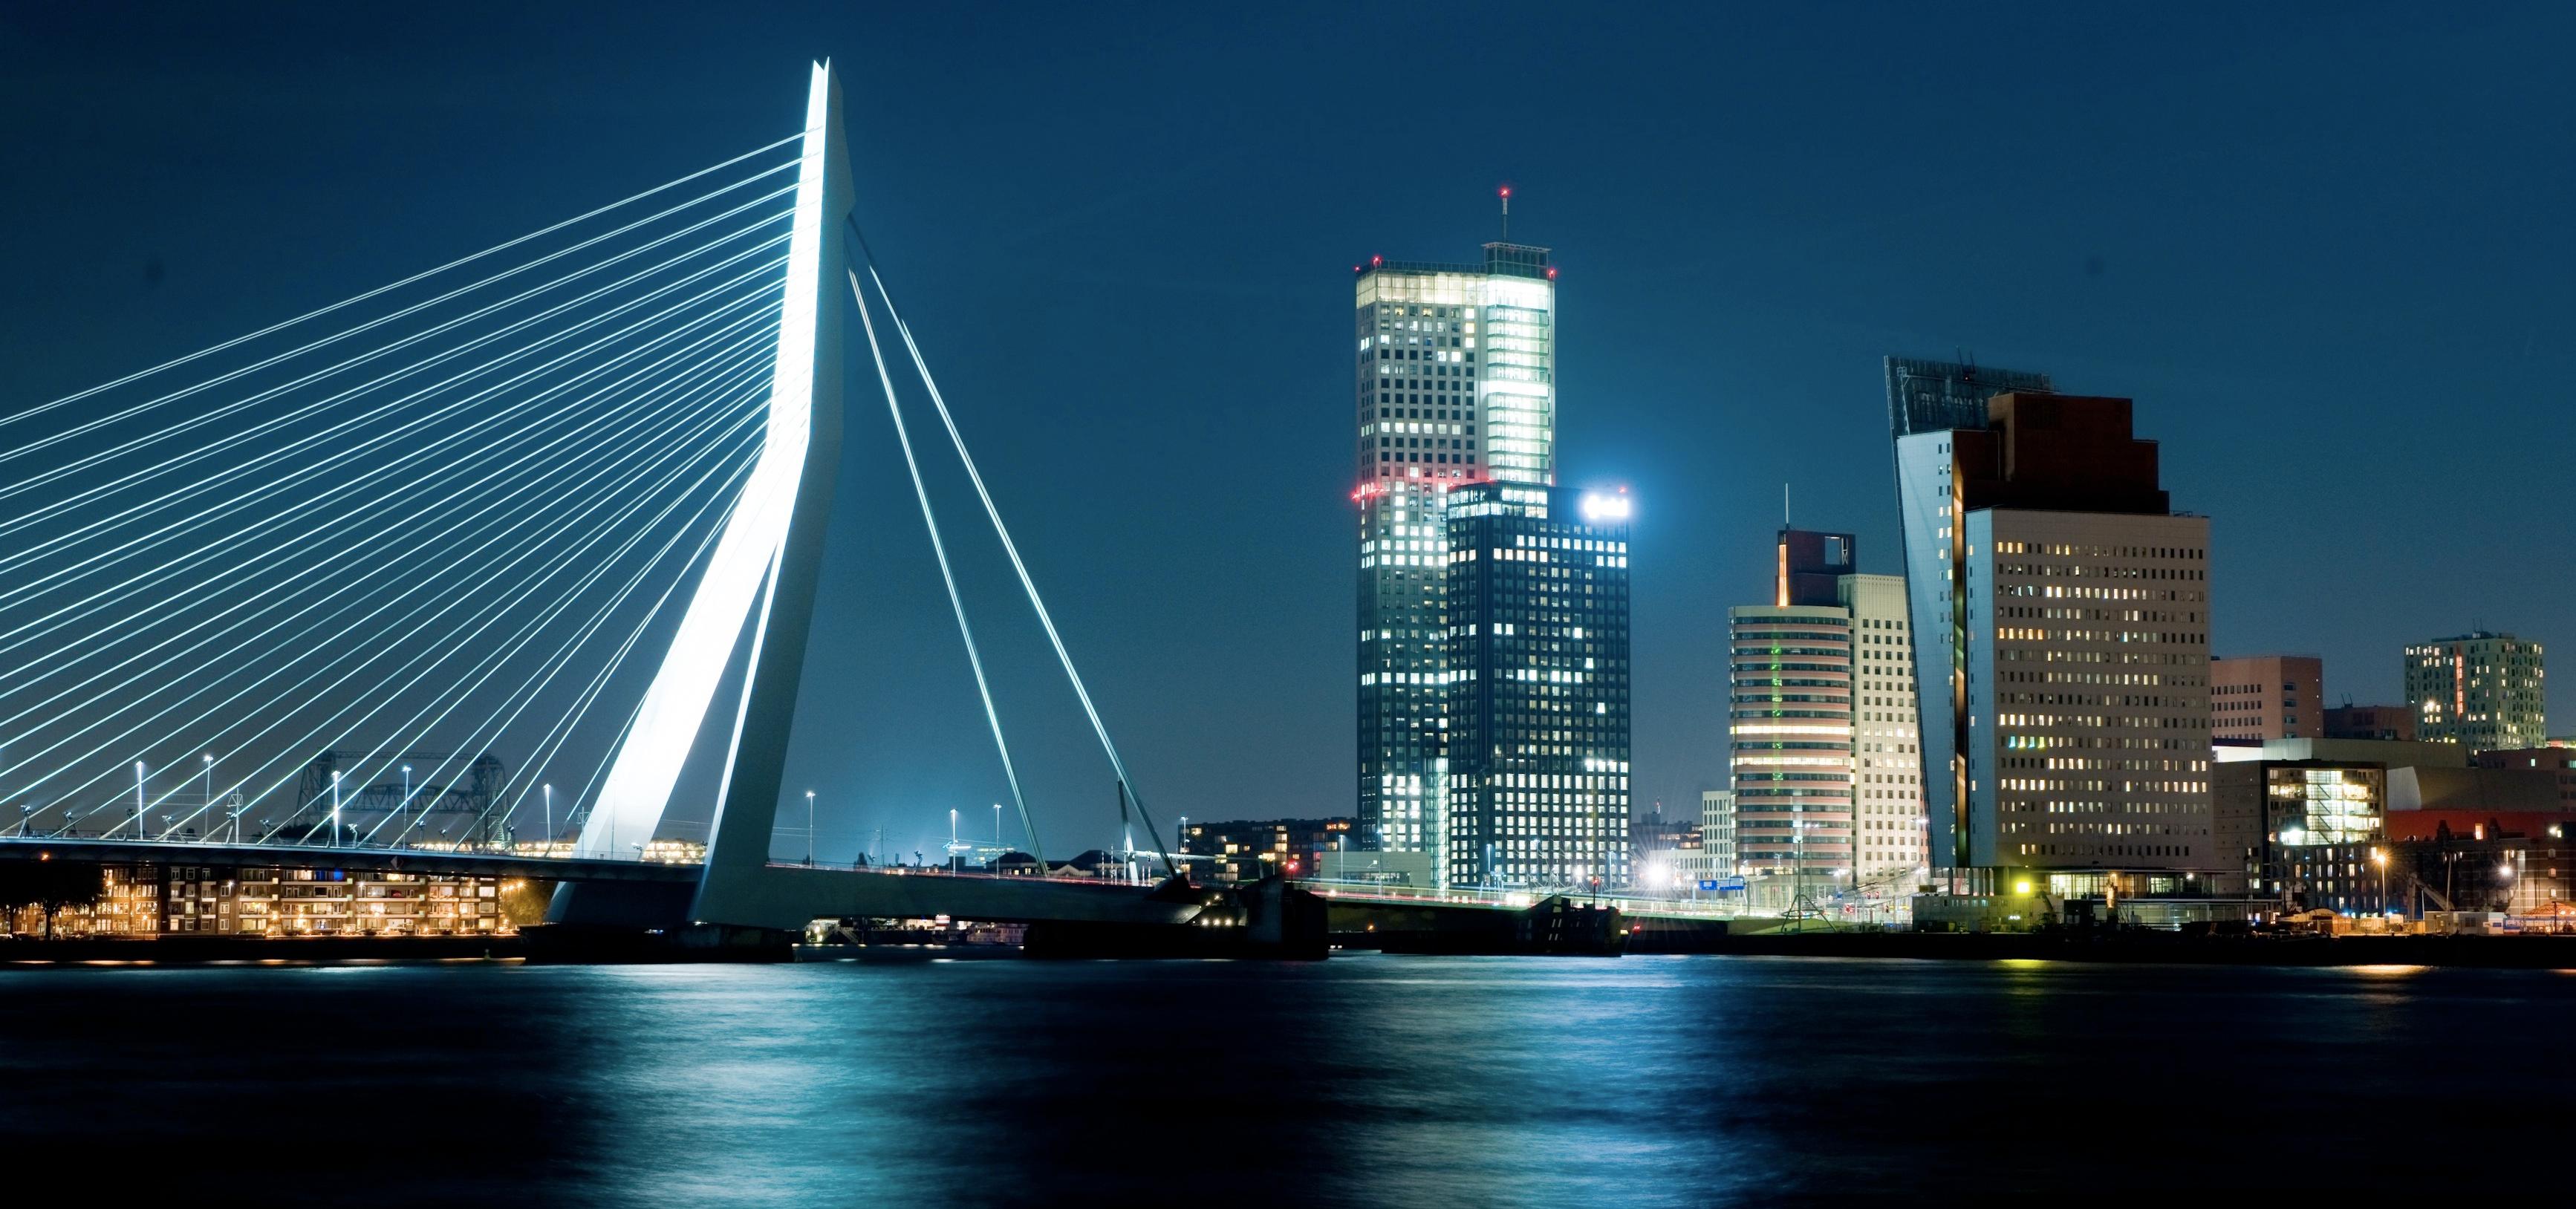 The Rotterdam city, cover photo